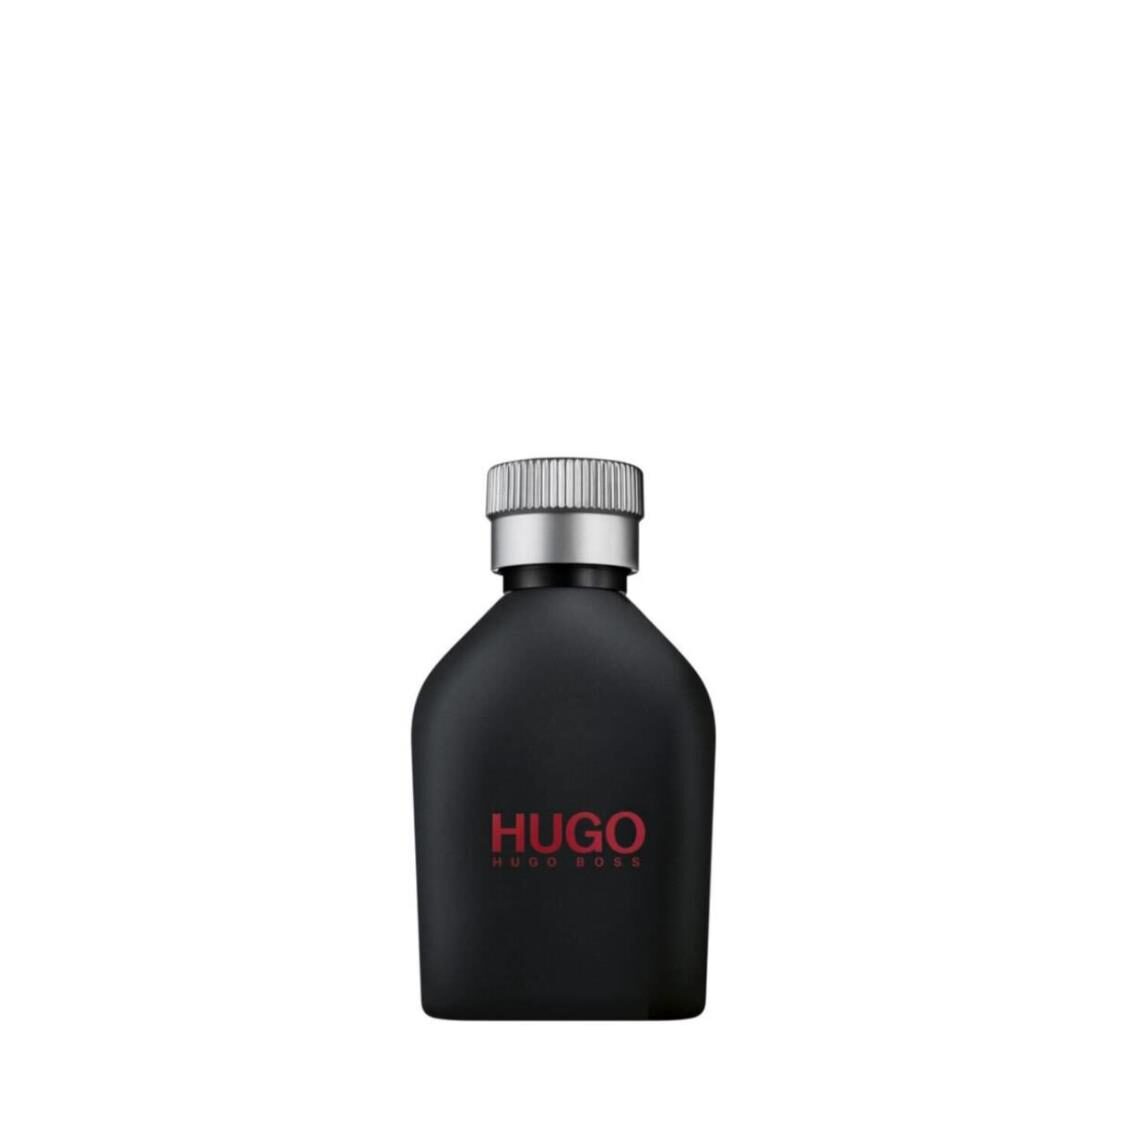 Hugo Just Different EDT 40ml worth 79